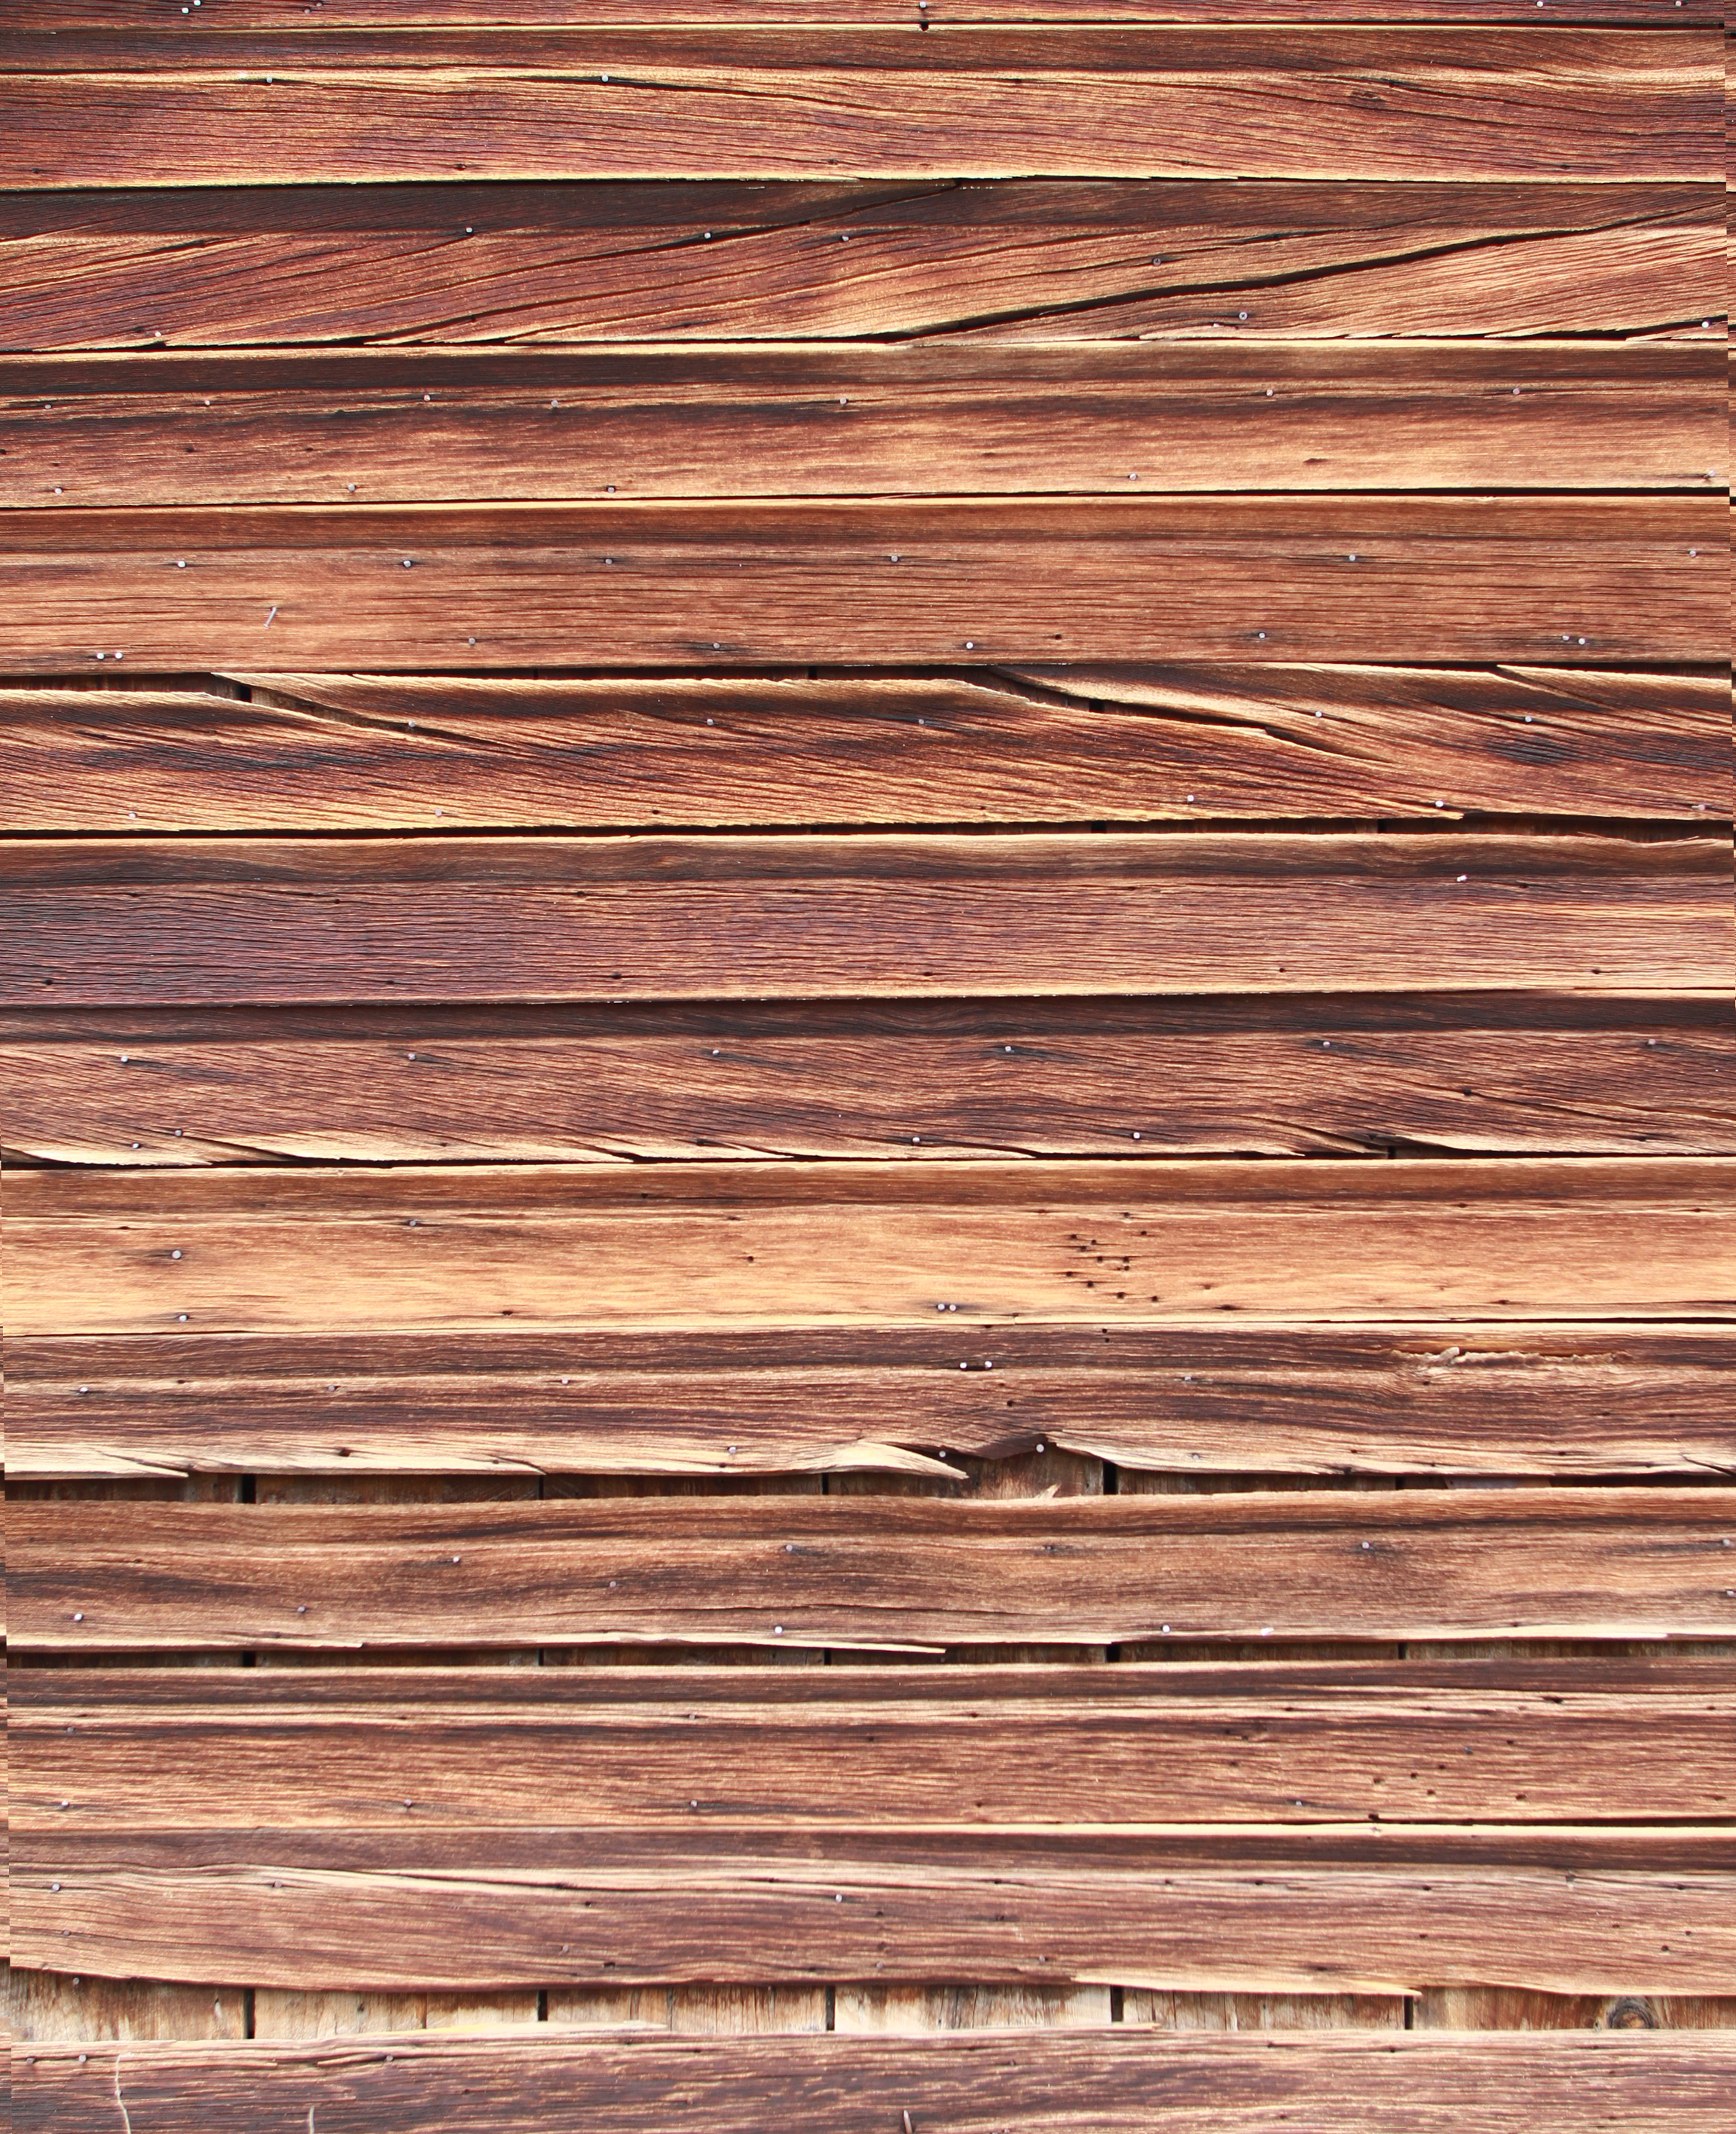 File:Old wood horizontal lines - Public Domain.jpg - Wikimedia Commons